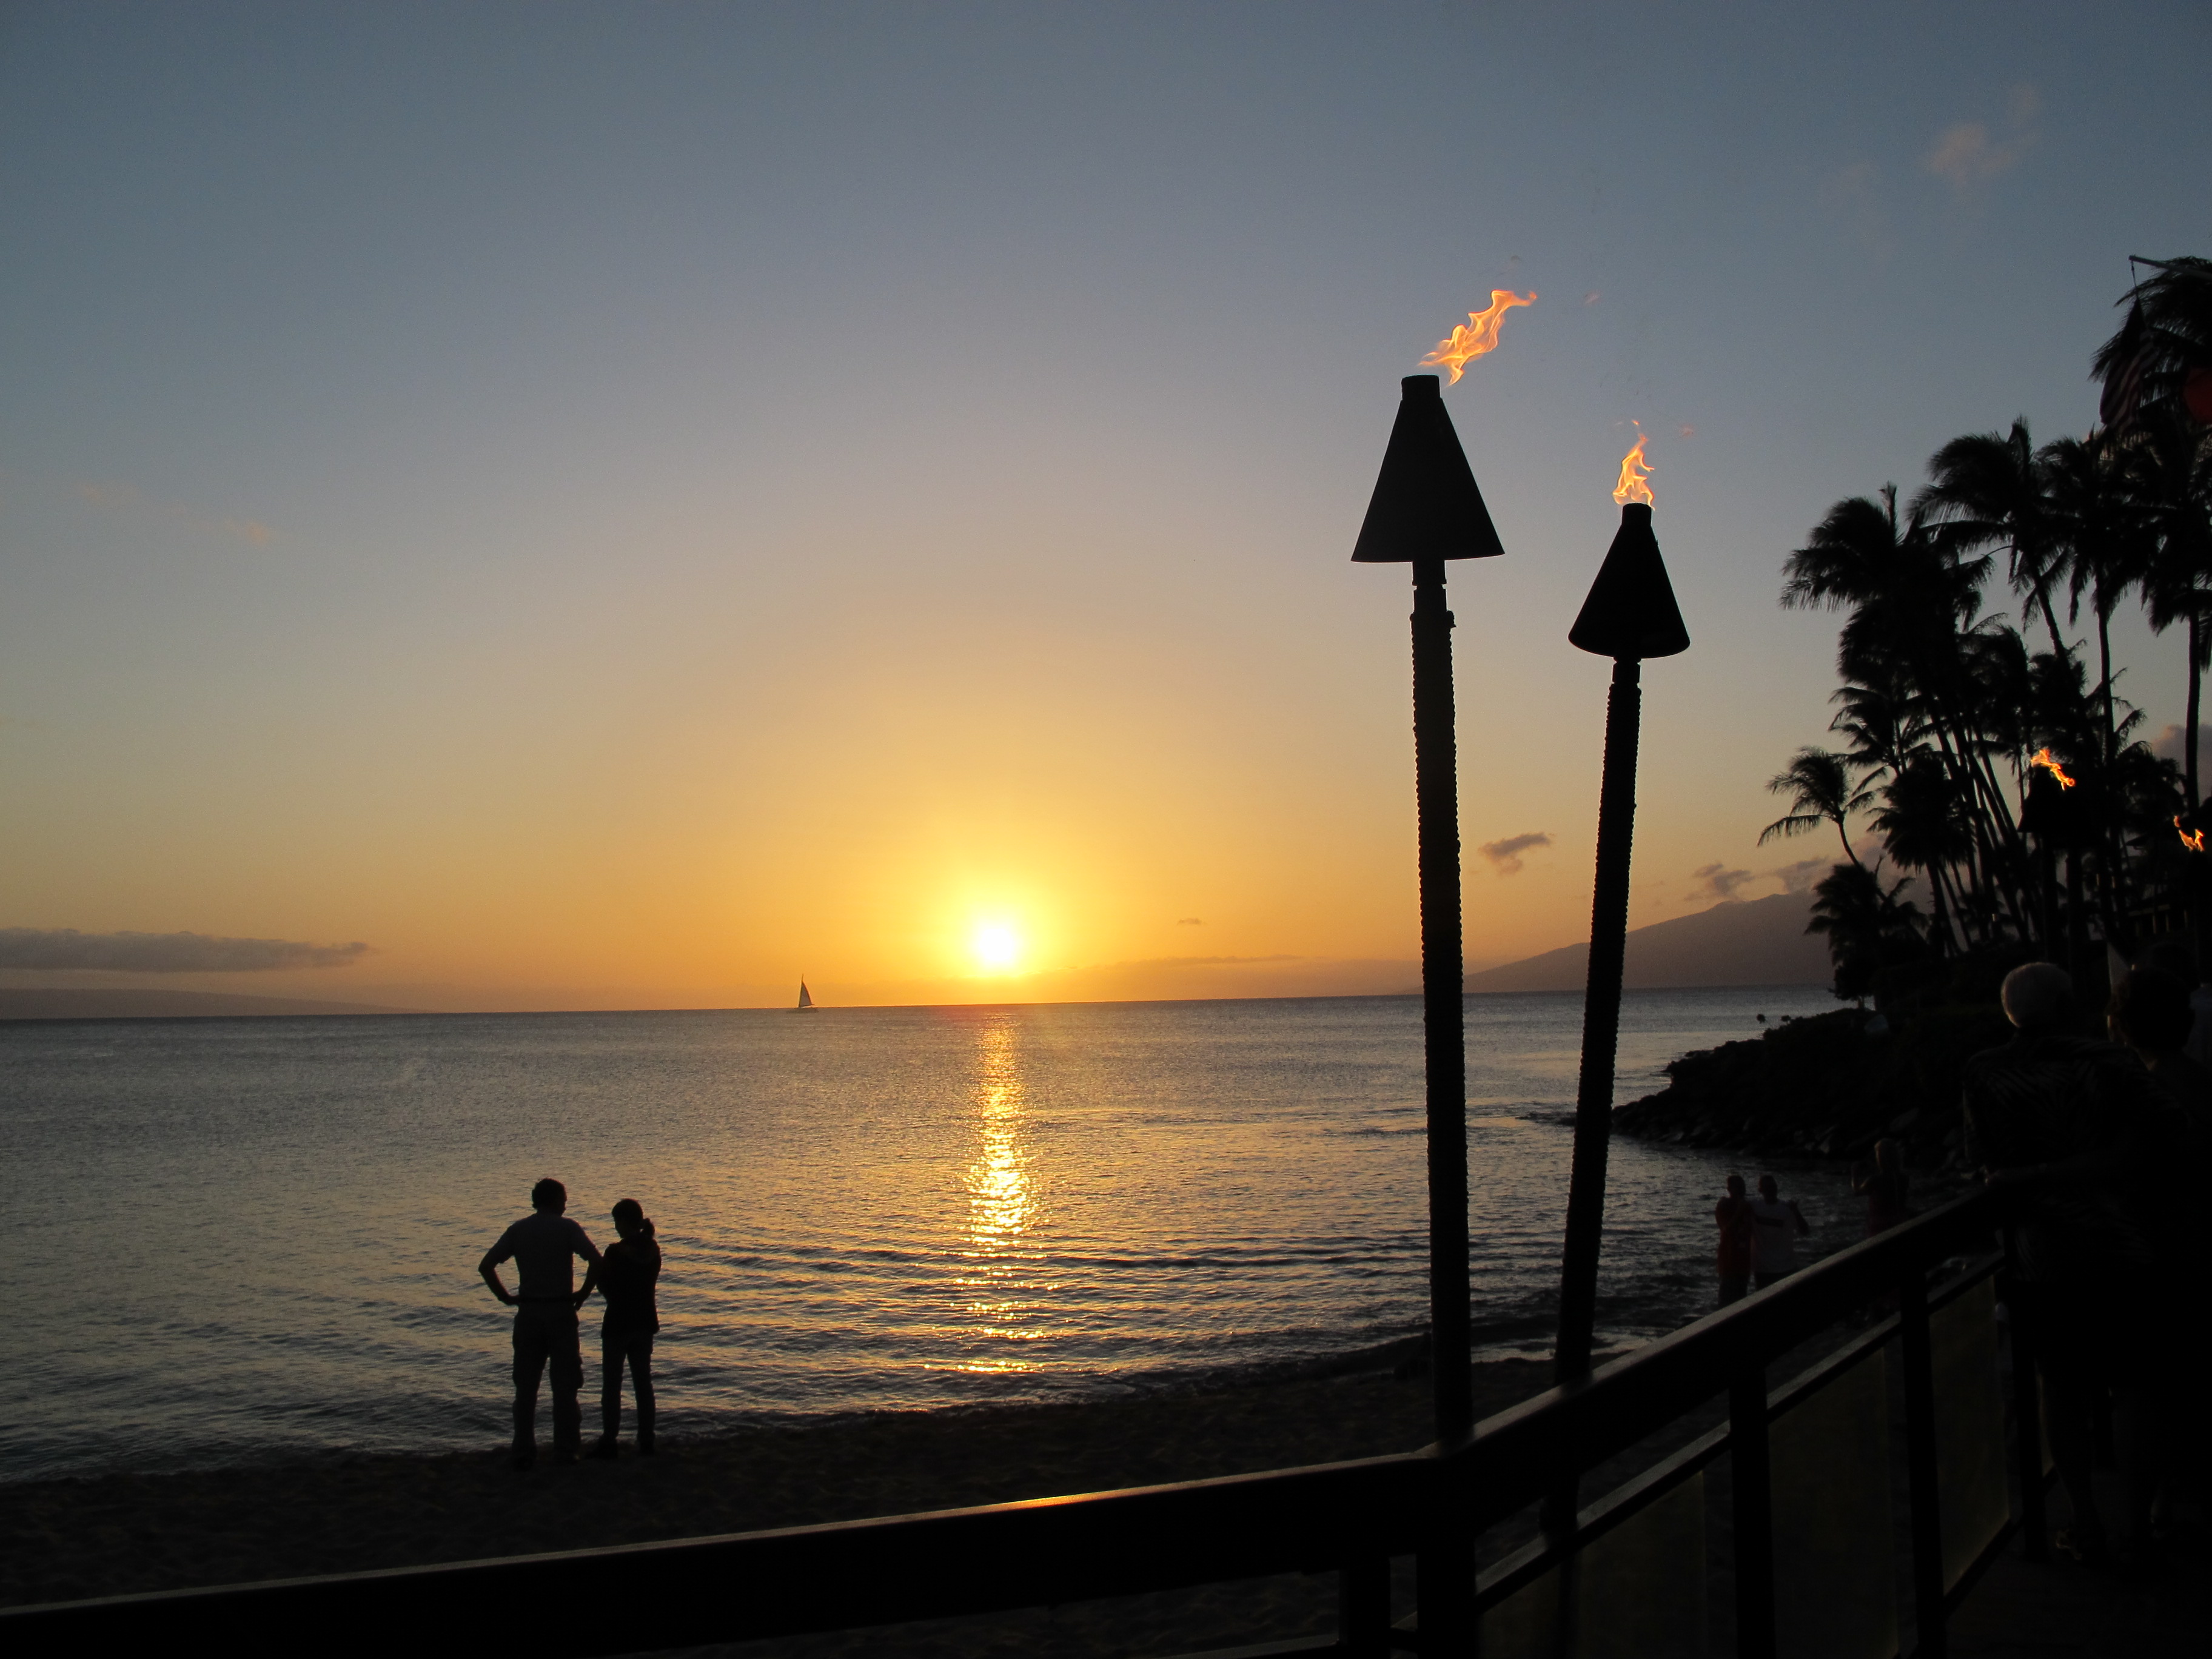 Sunsets are magical at Napili Beach, Maui. JIM BYERS PHOTO